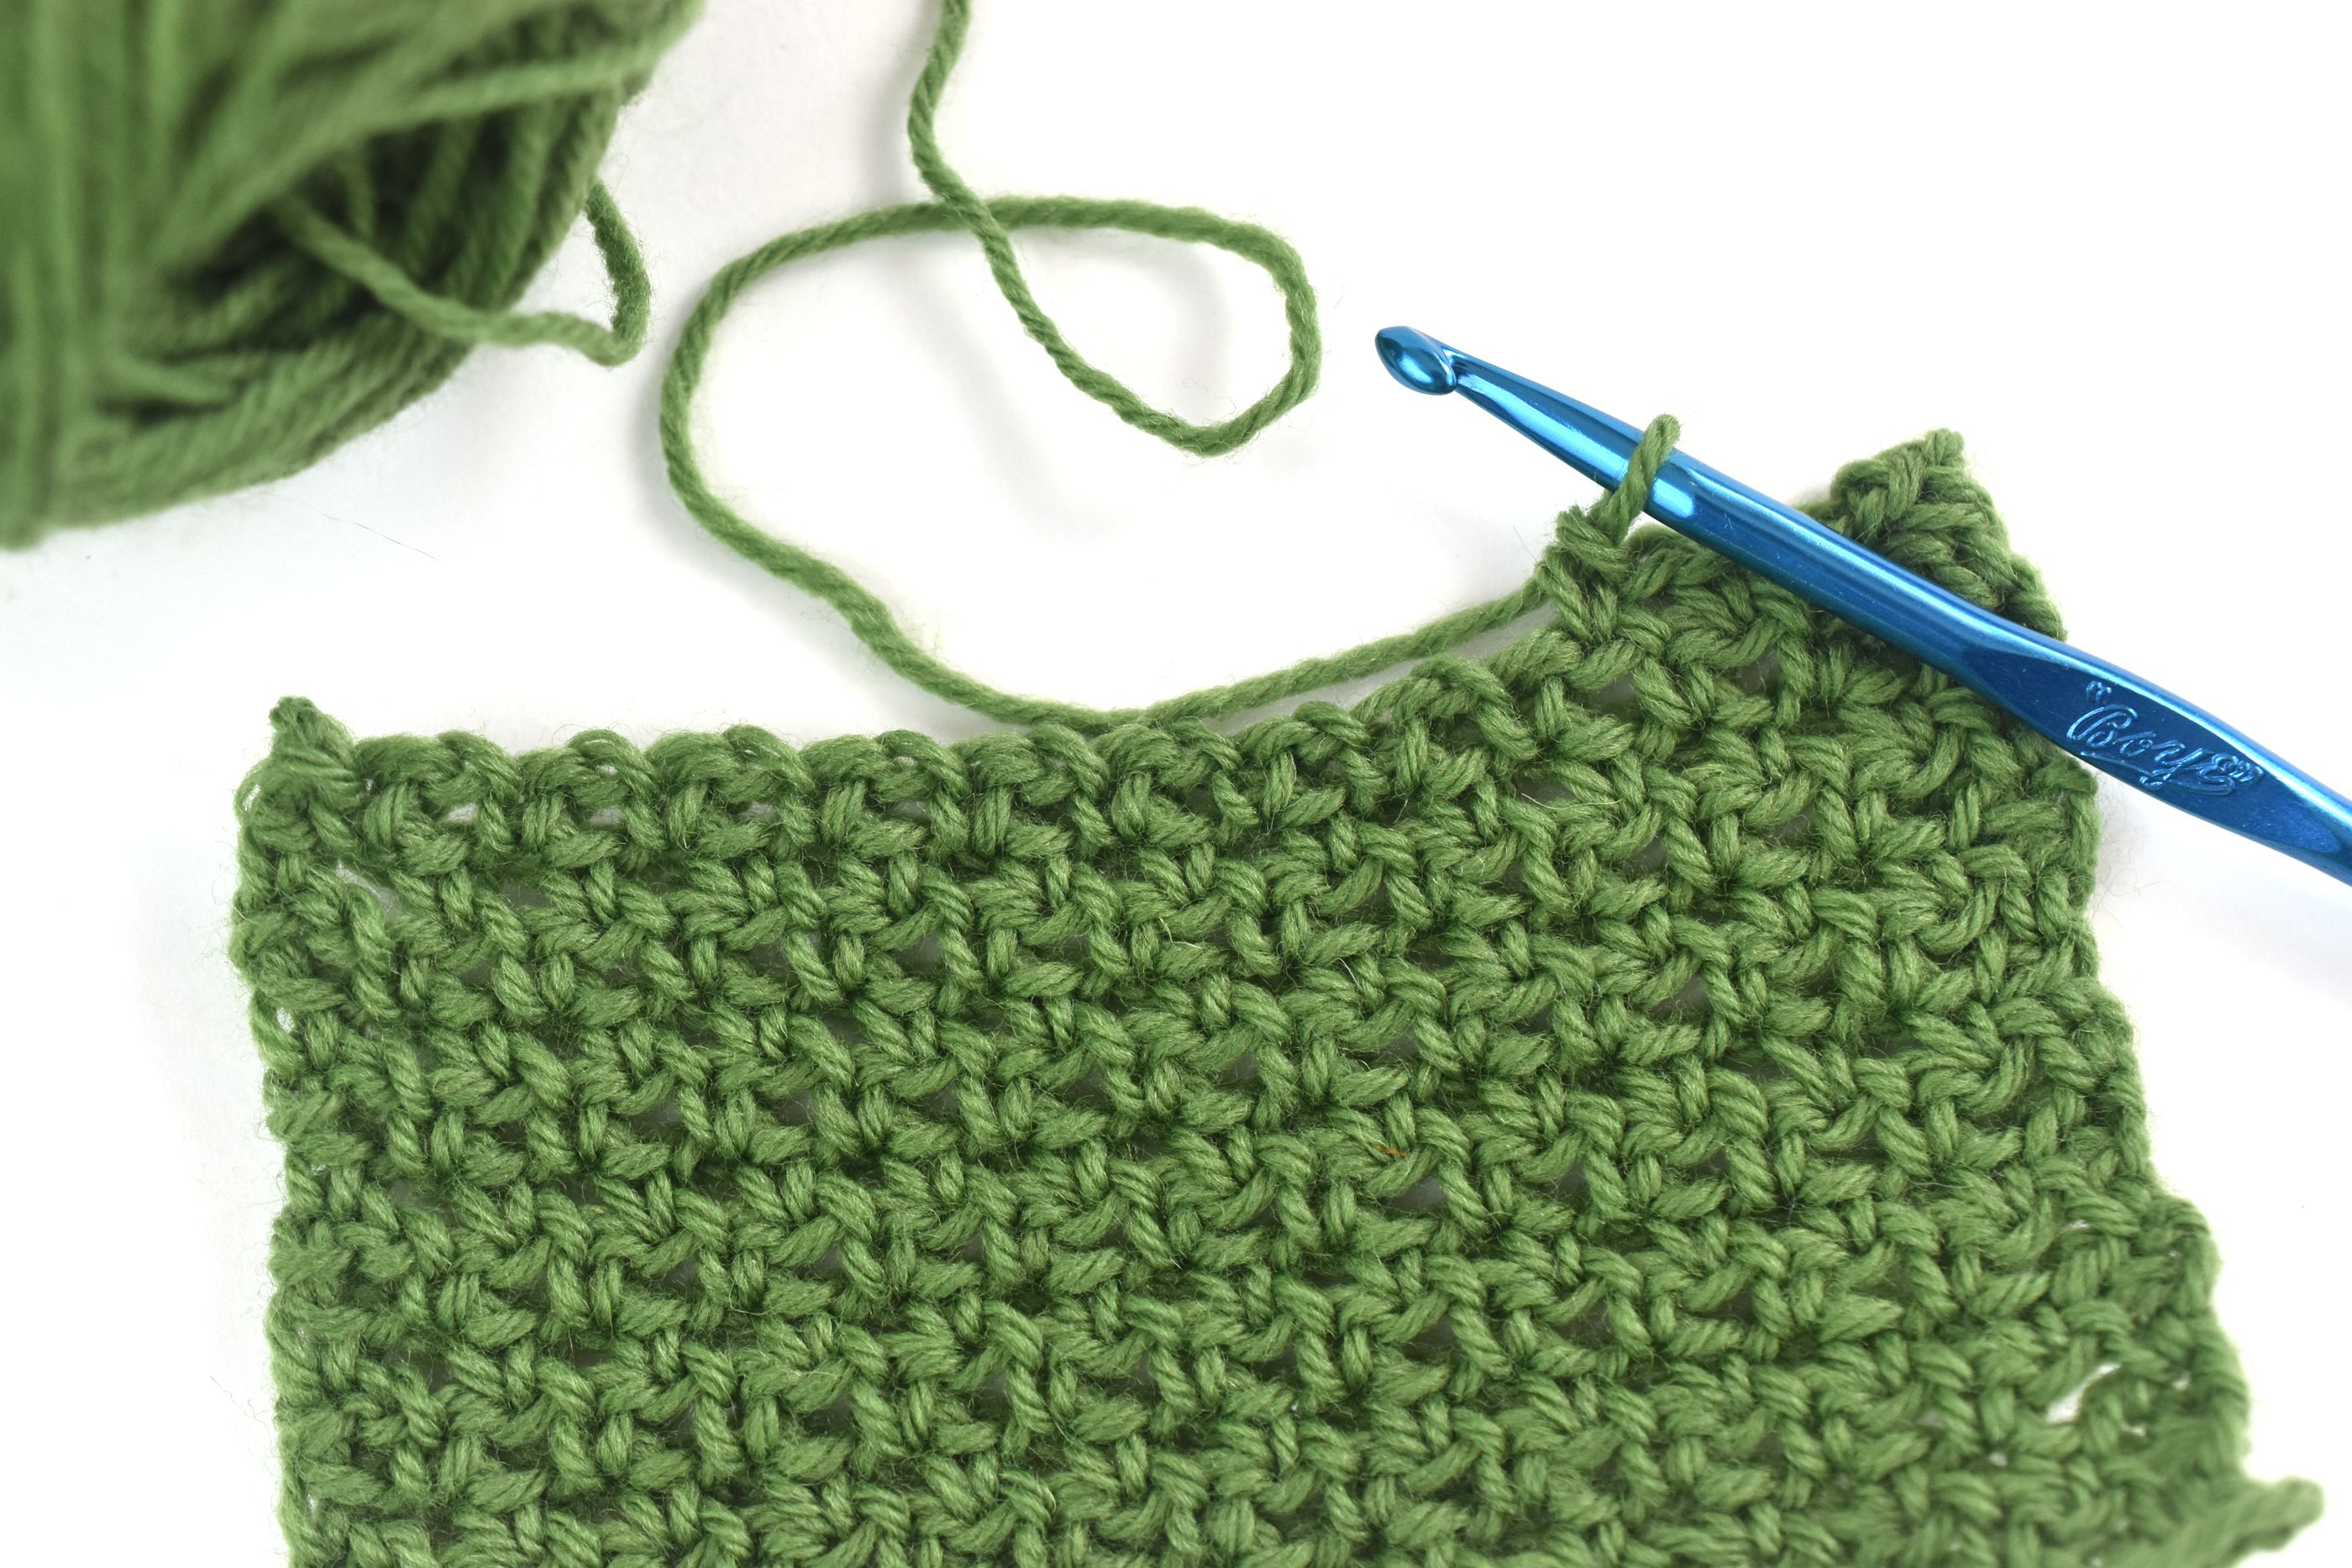 Crochet Stitches Patterns 10 Most Popular Crochet Stitches